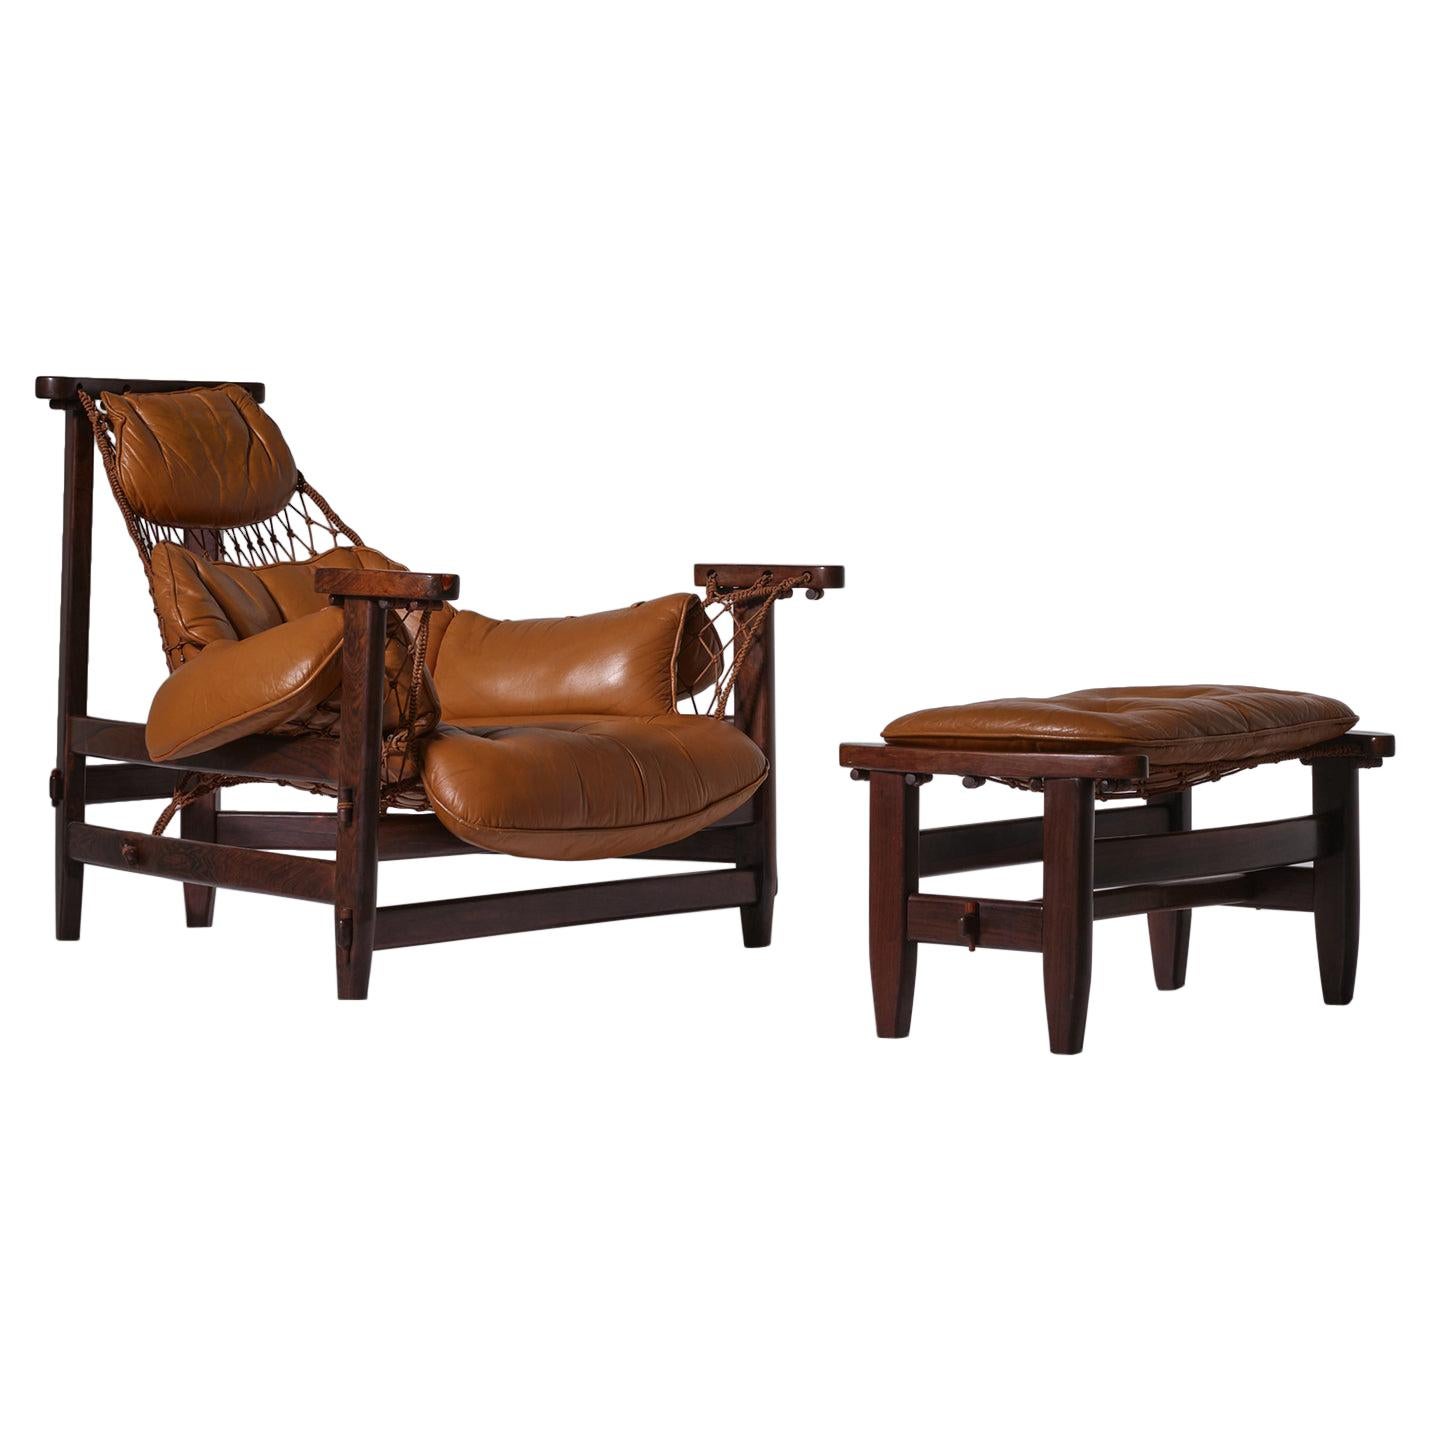 ‘Jangada’ Lounge Chair and Ottoman by Jean Gillon, Brazil, 1968